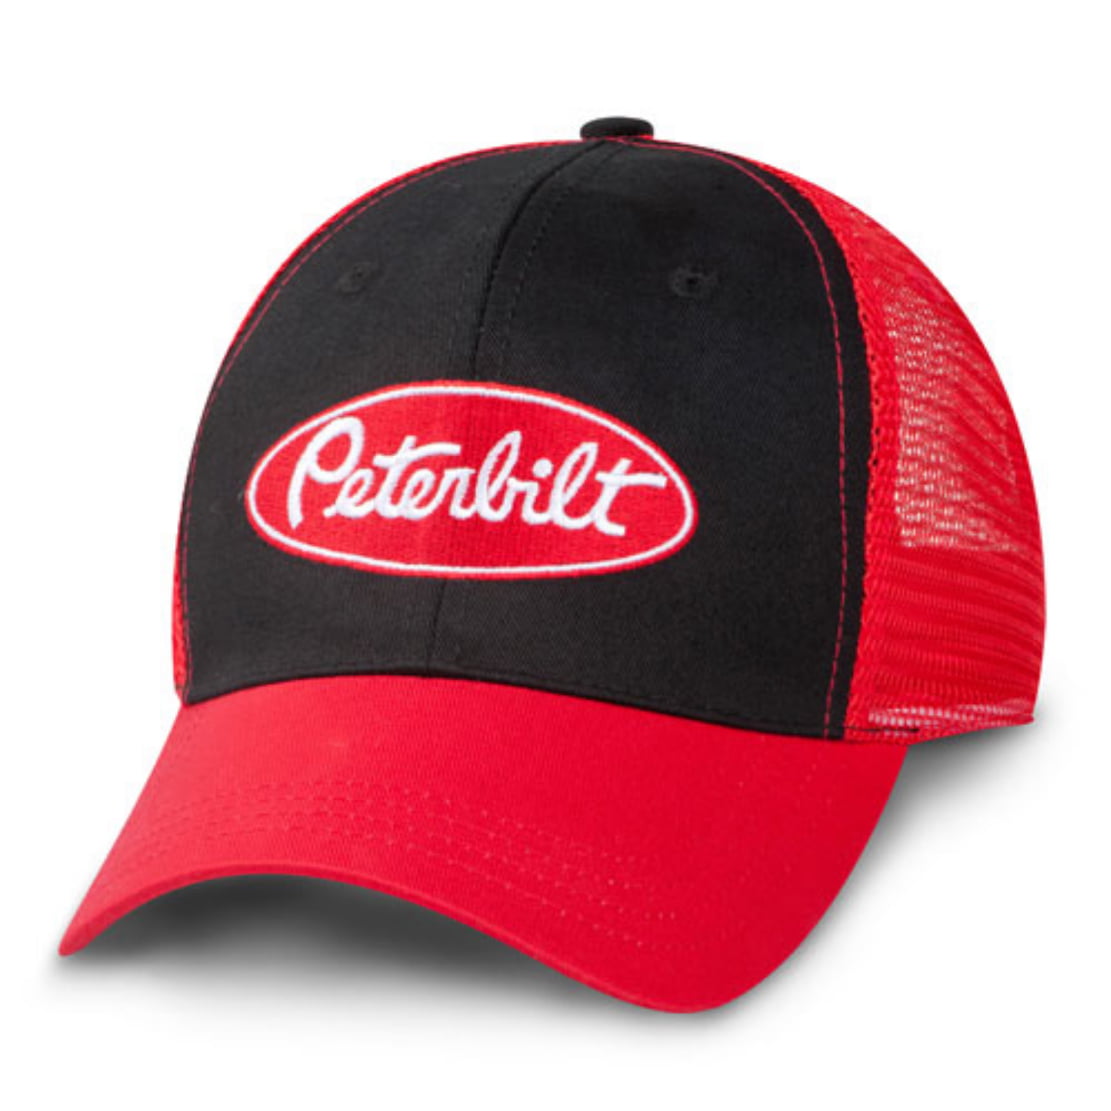 Peterbilt Motors Trucks Khaki Tan Pigment Dyed Cap/Hat 